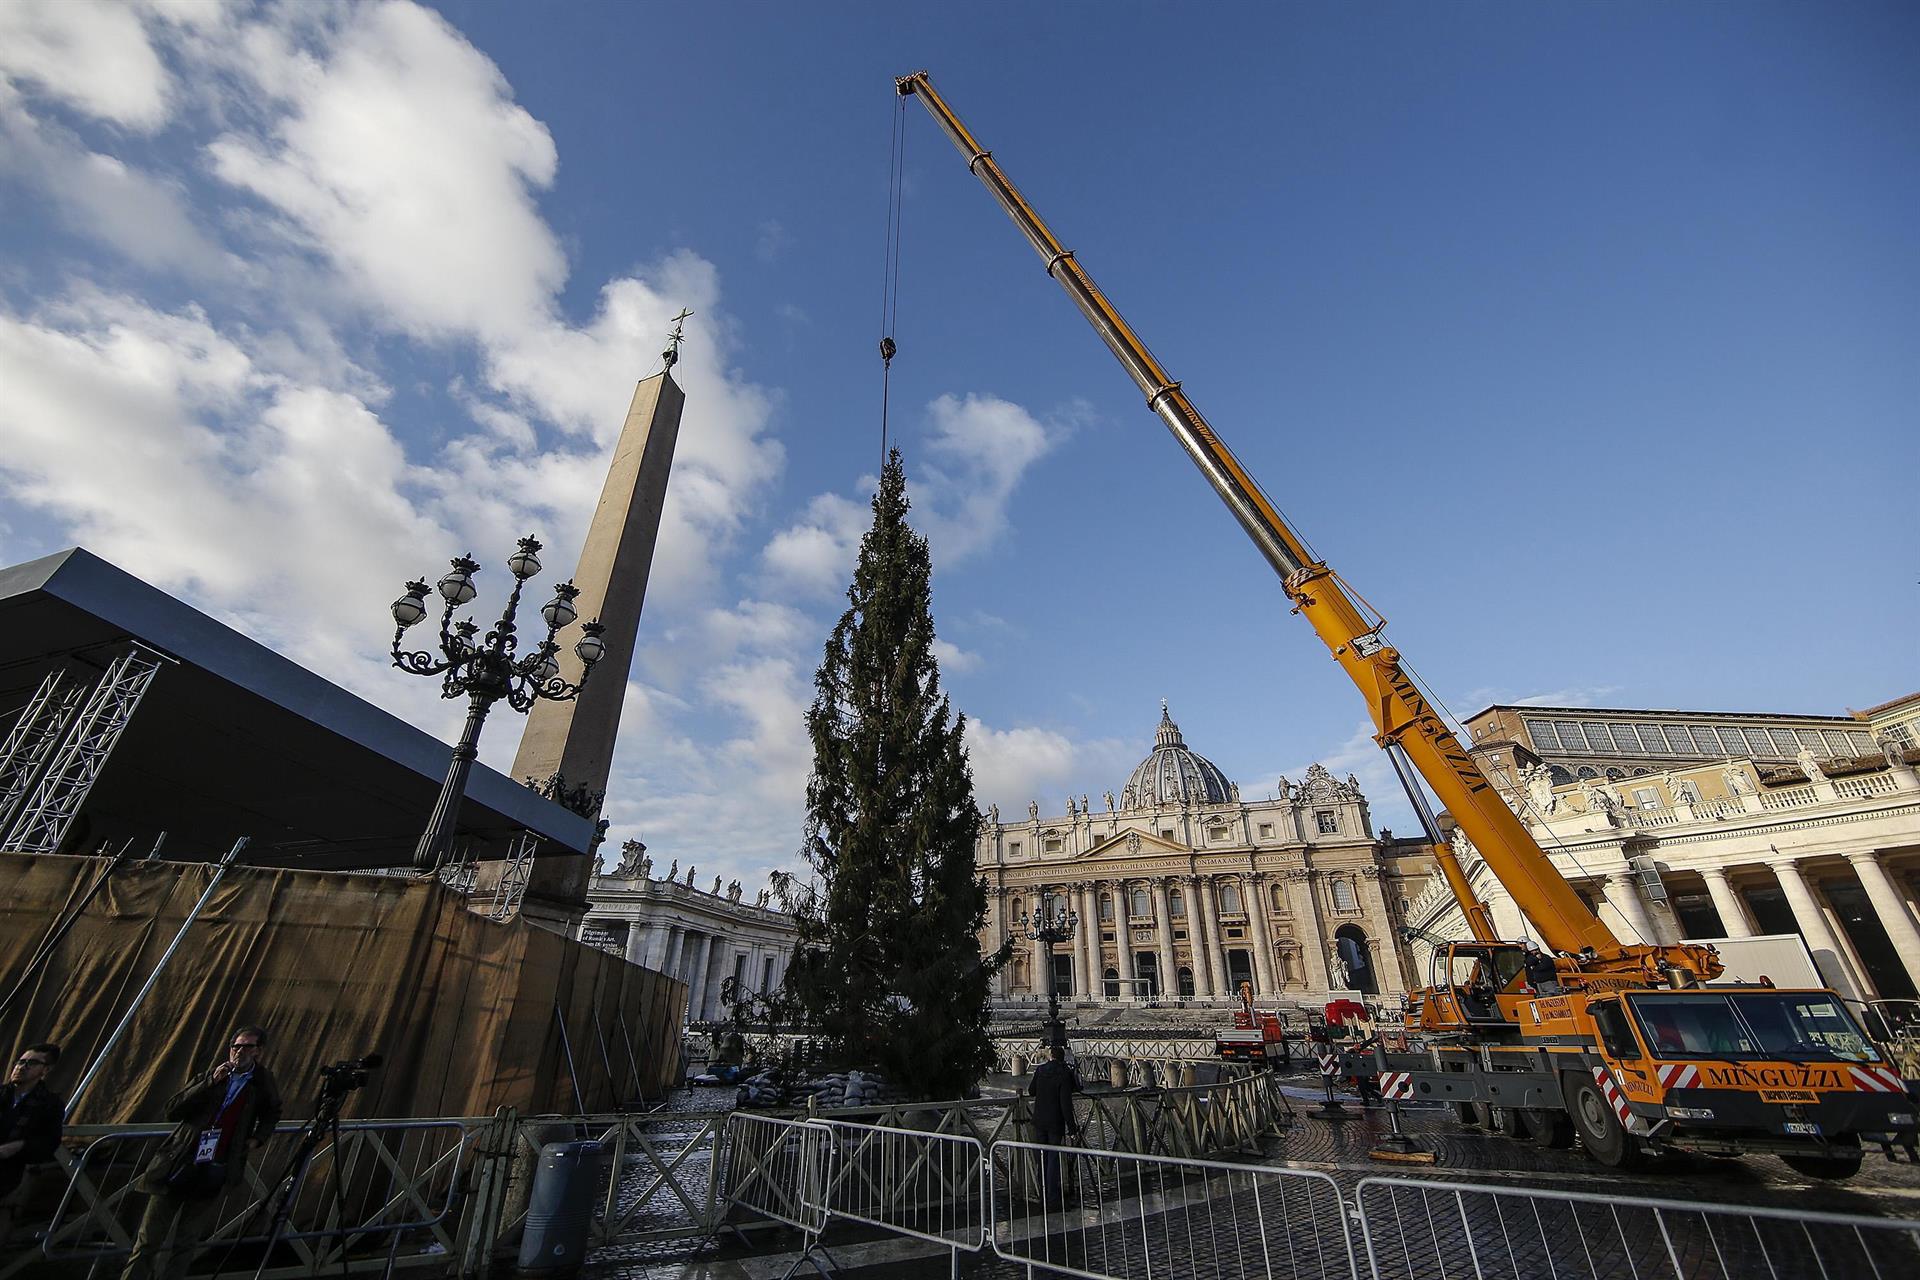 El hombre que evitó cortar el protegido árbol de Navidad del Vaticano